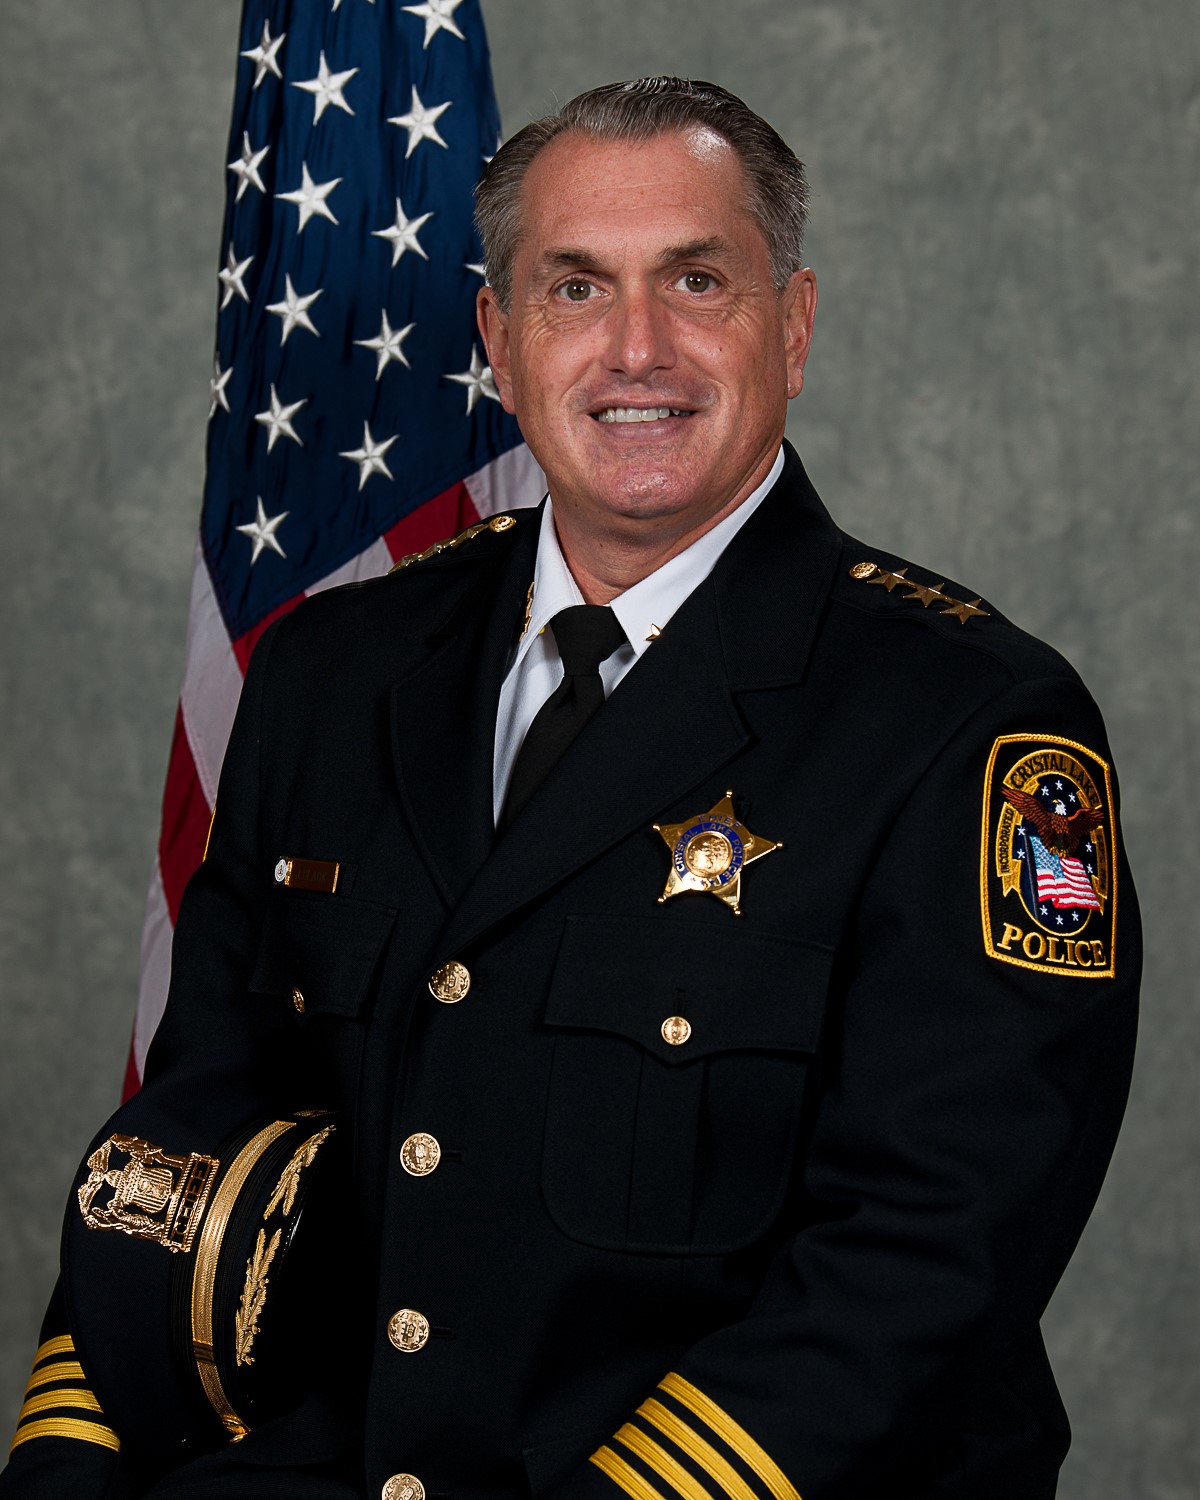 Crystal Lake Police Chief James R. Black